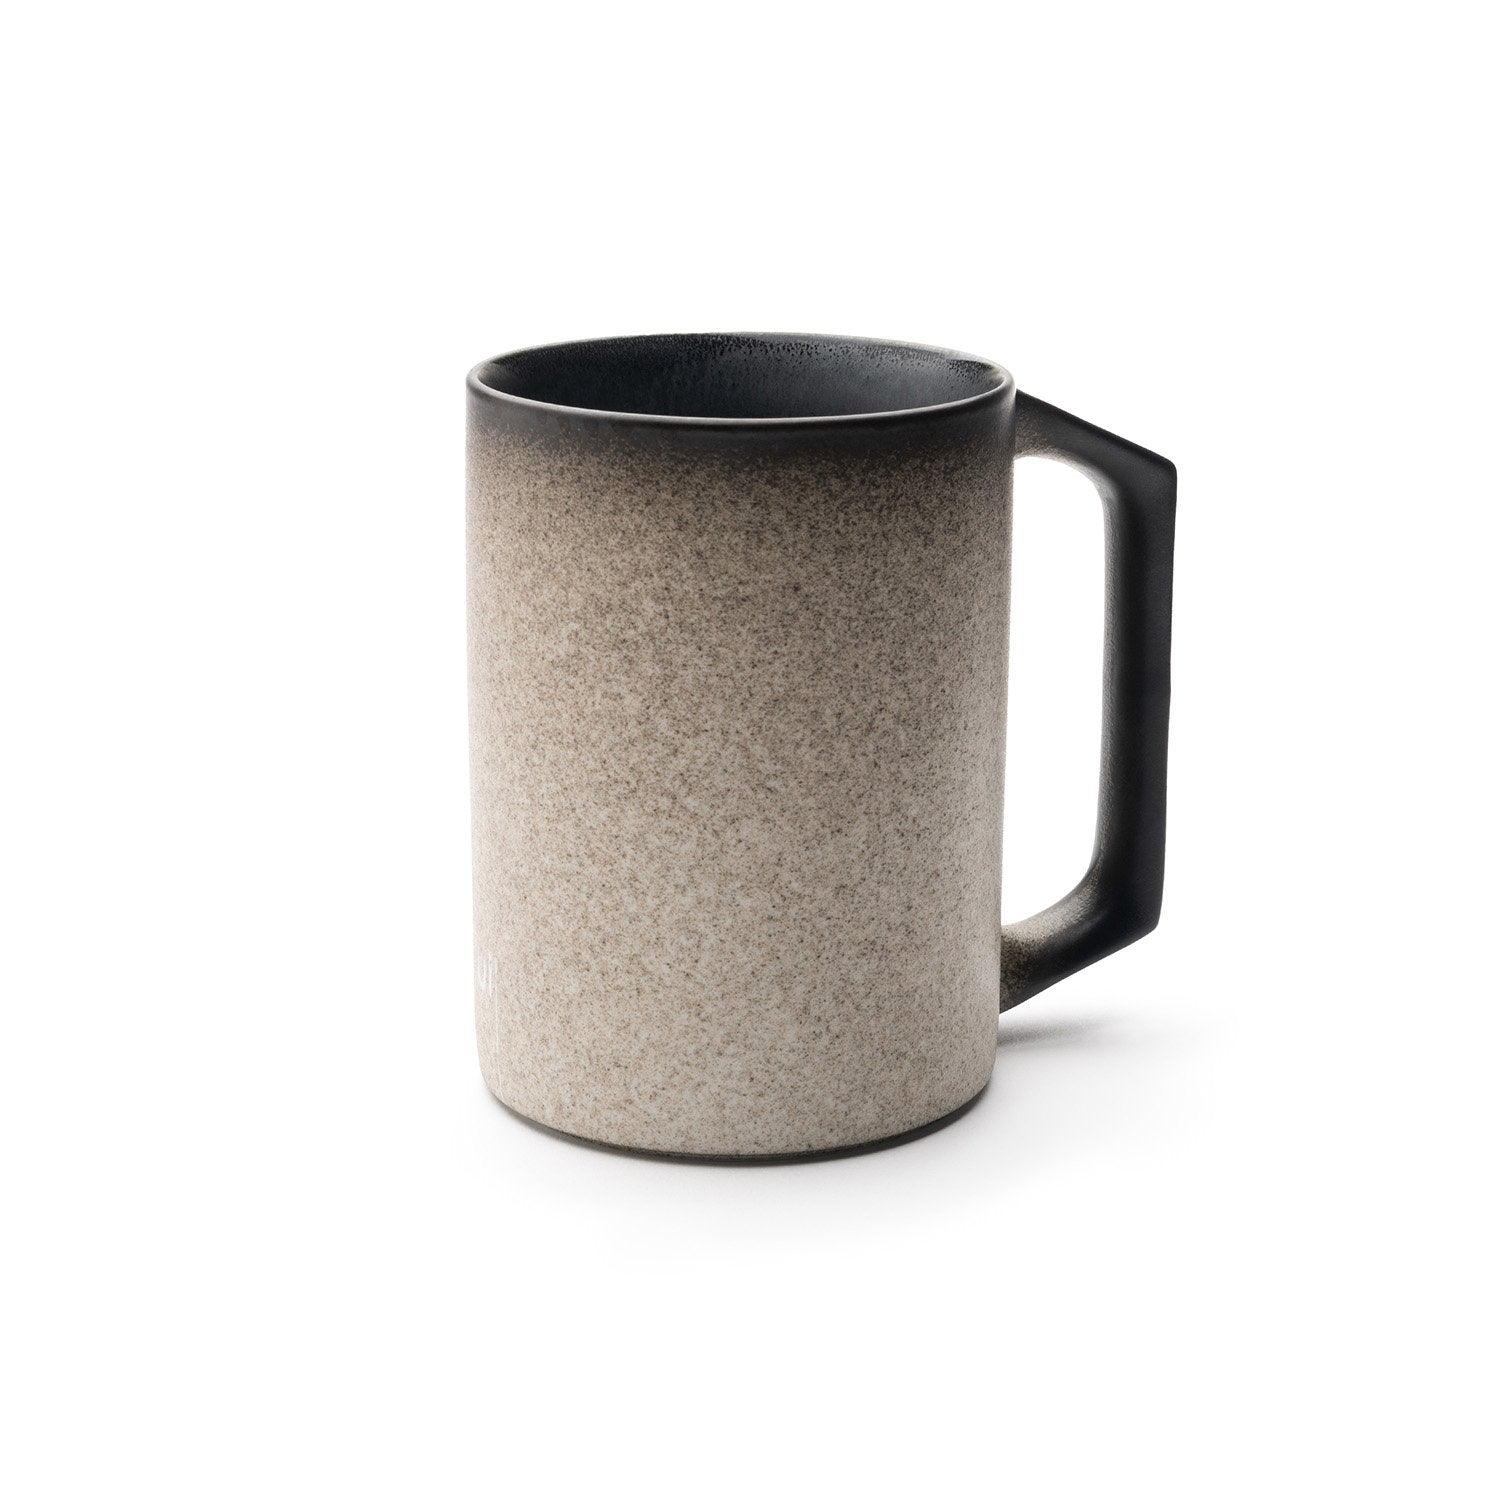 Cement textured mug with design